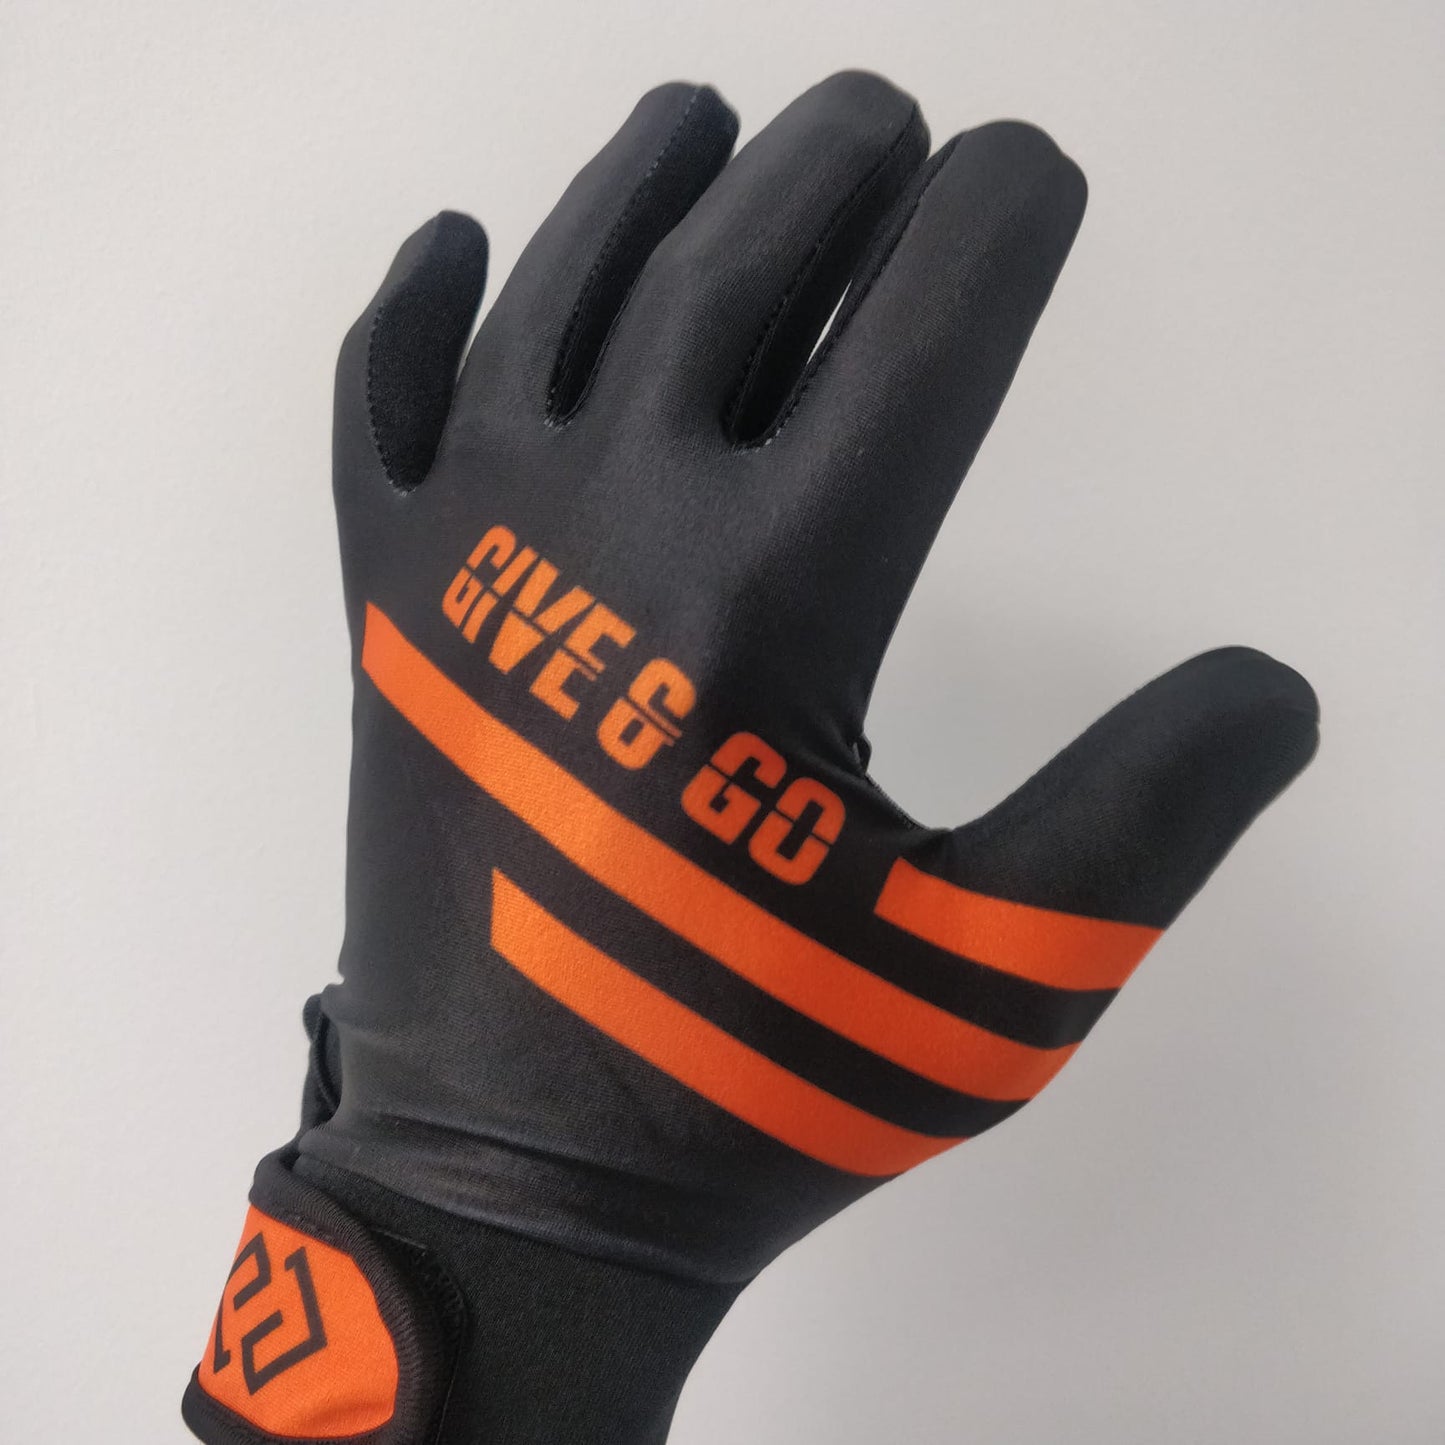 Give & Go Gloves (Black / Orange)